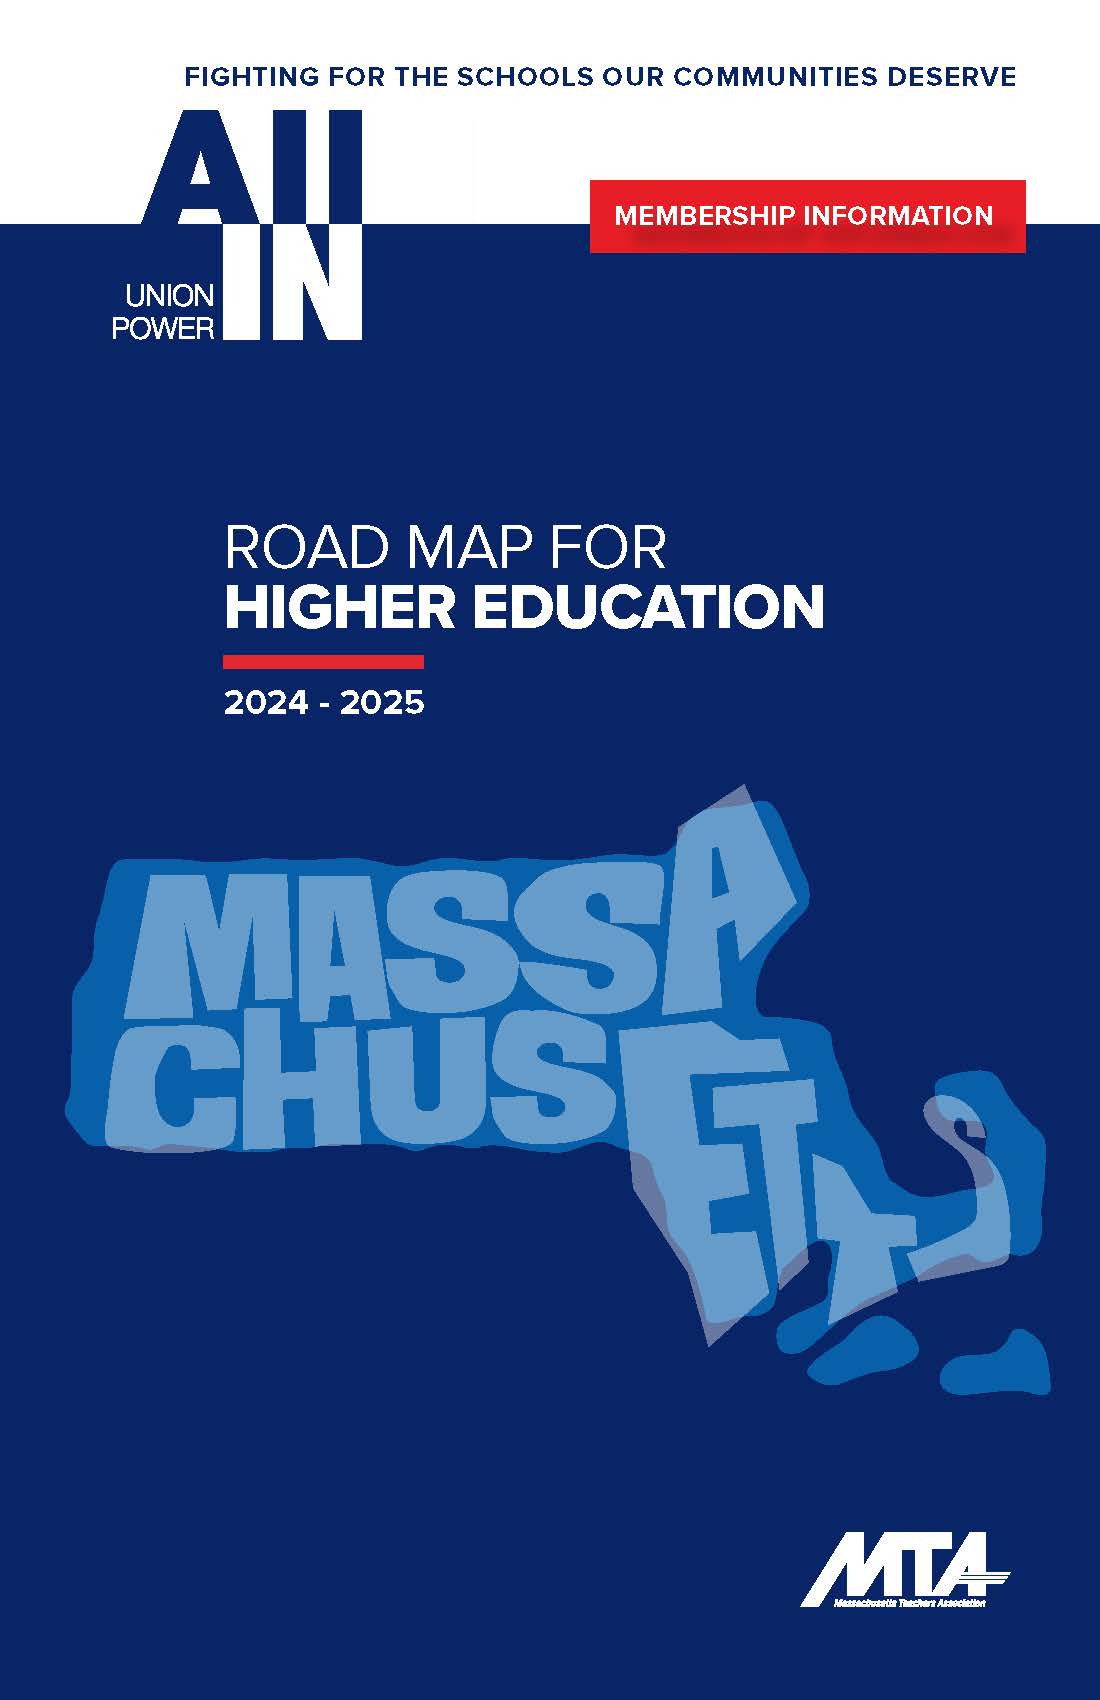 Higher Ed Roadmap